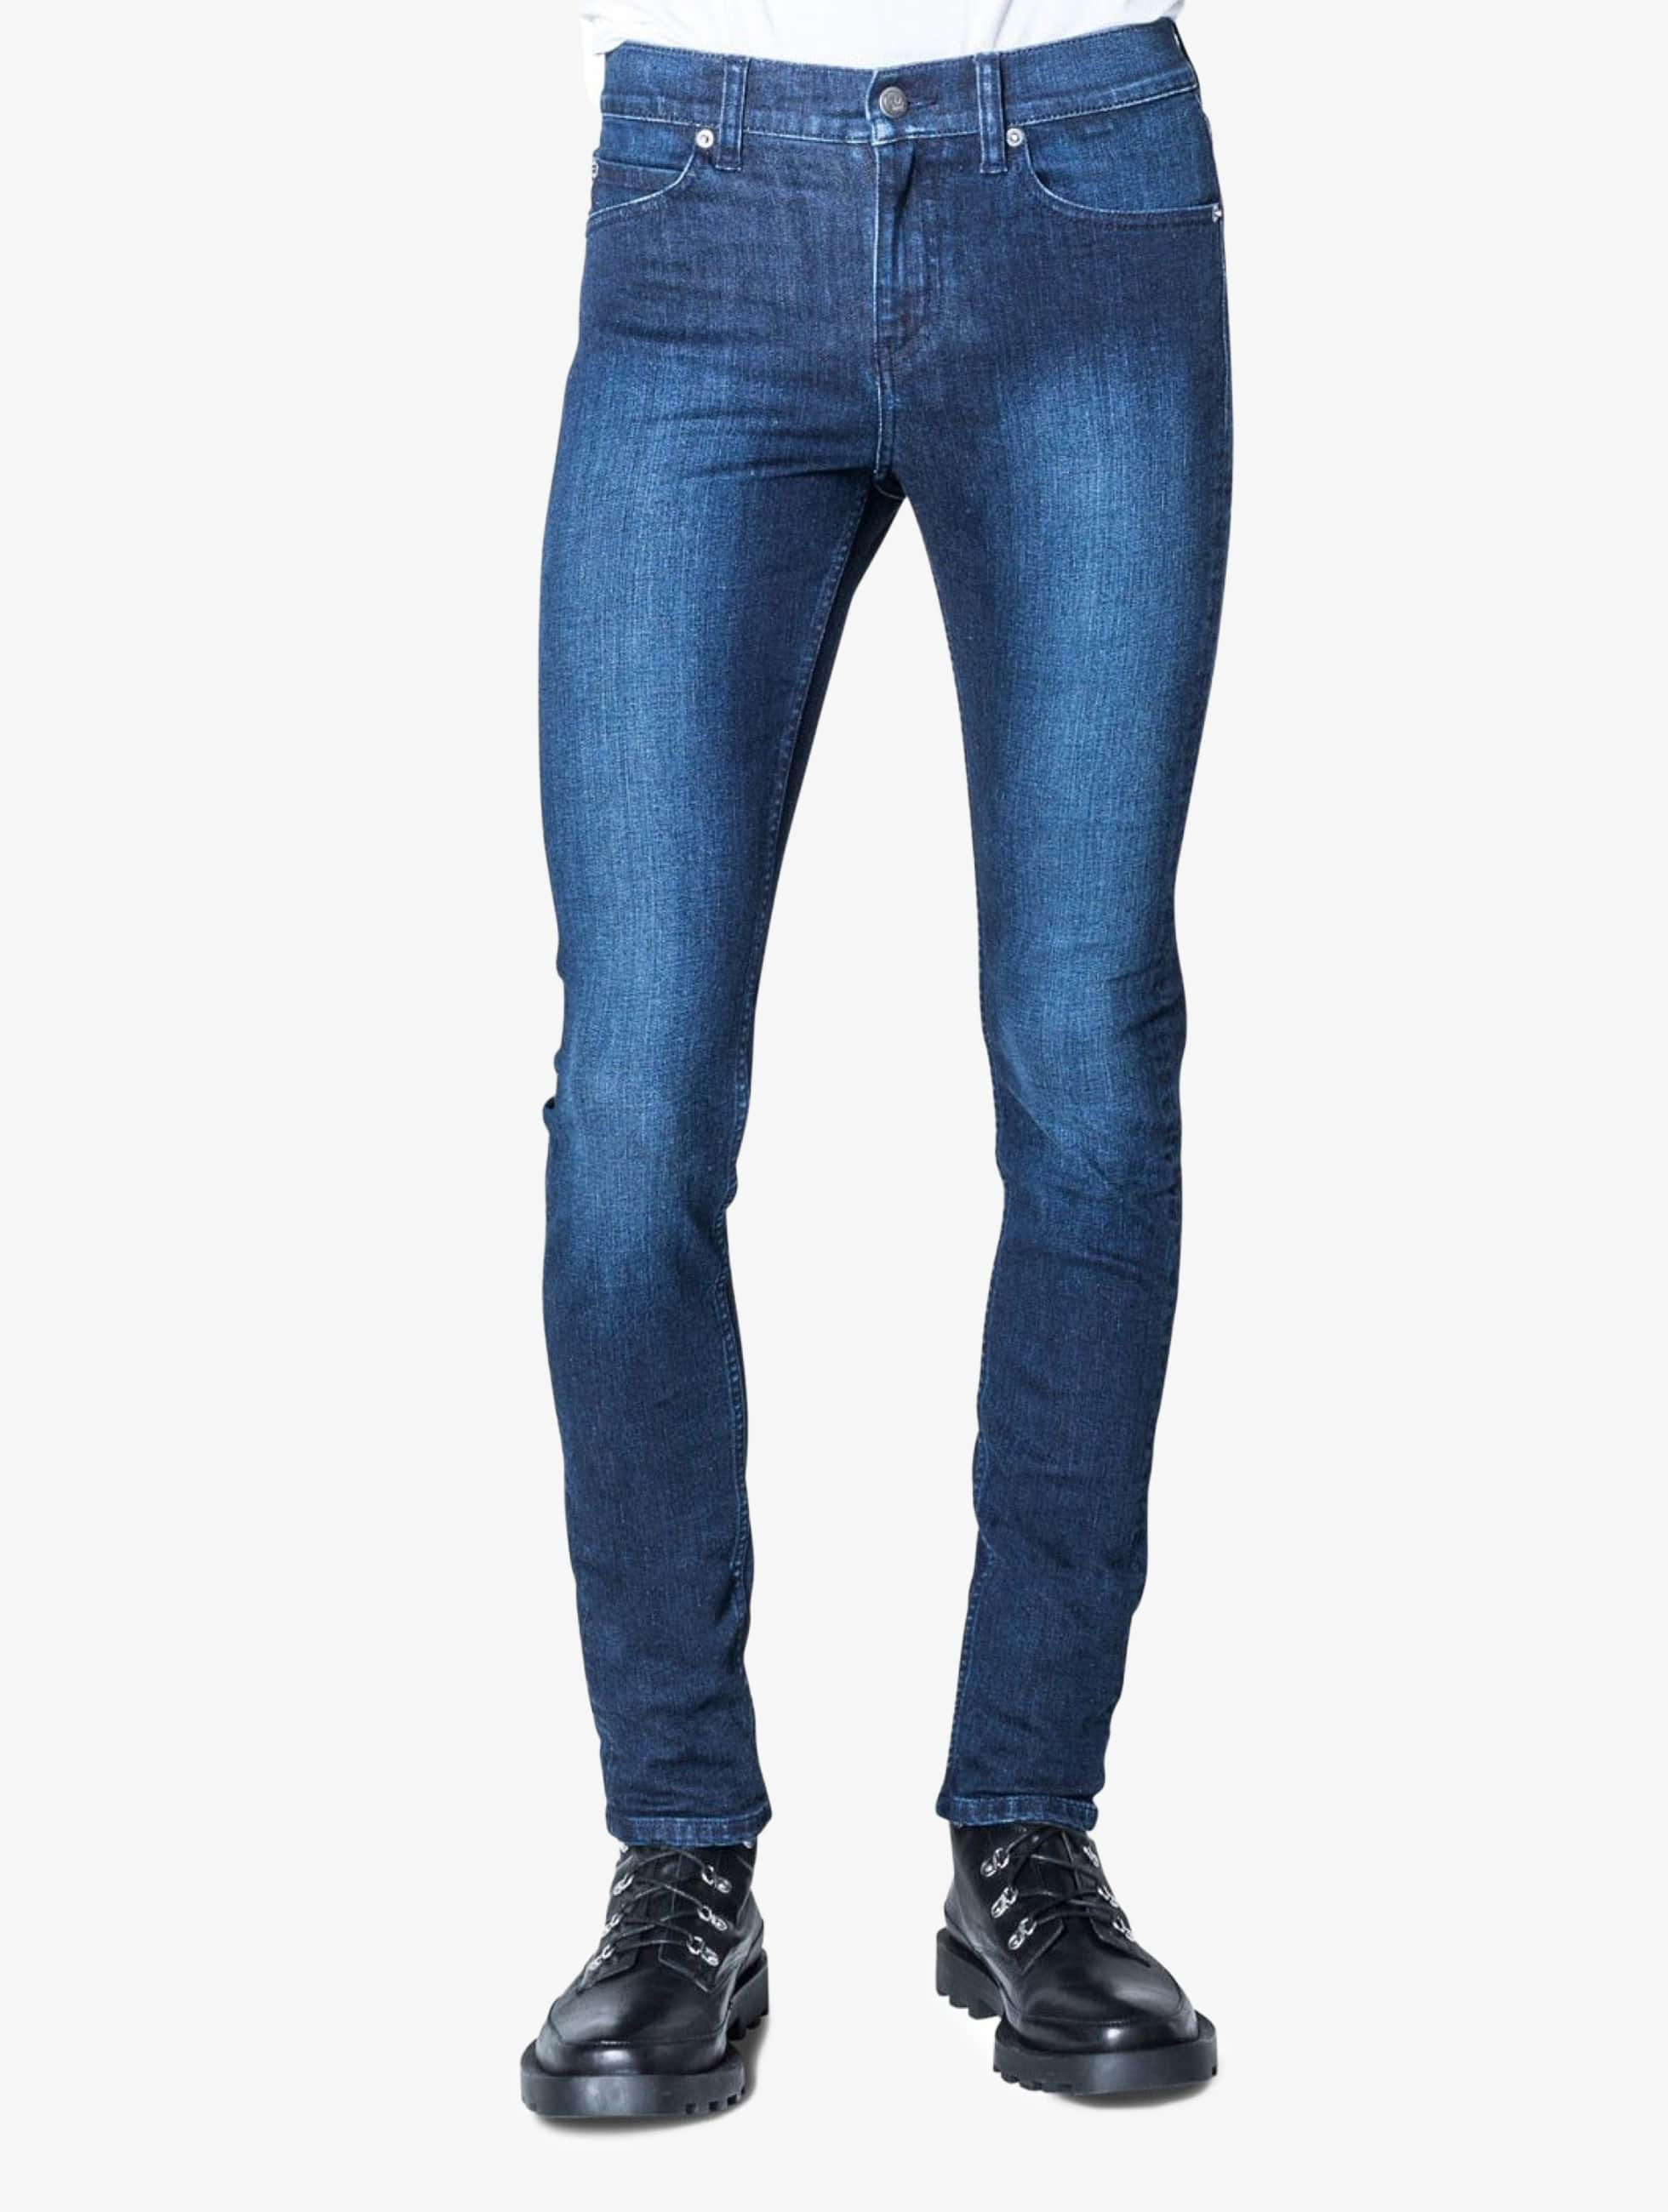 Afleiden betreuren stel je voor Cheap Monday Jeans / Skinny Jeans Tight in blue 551415